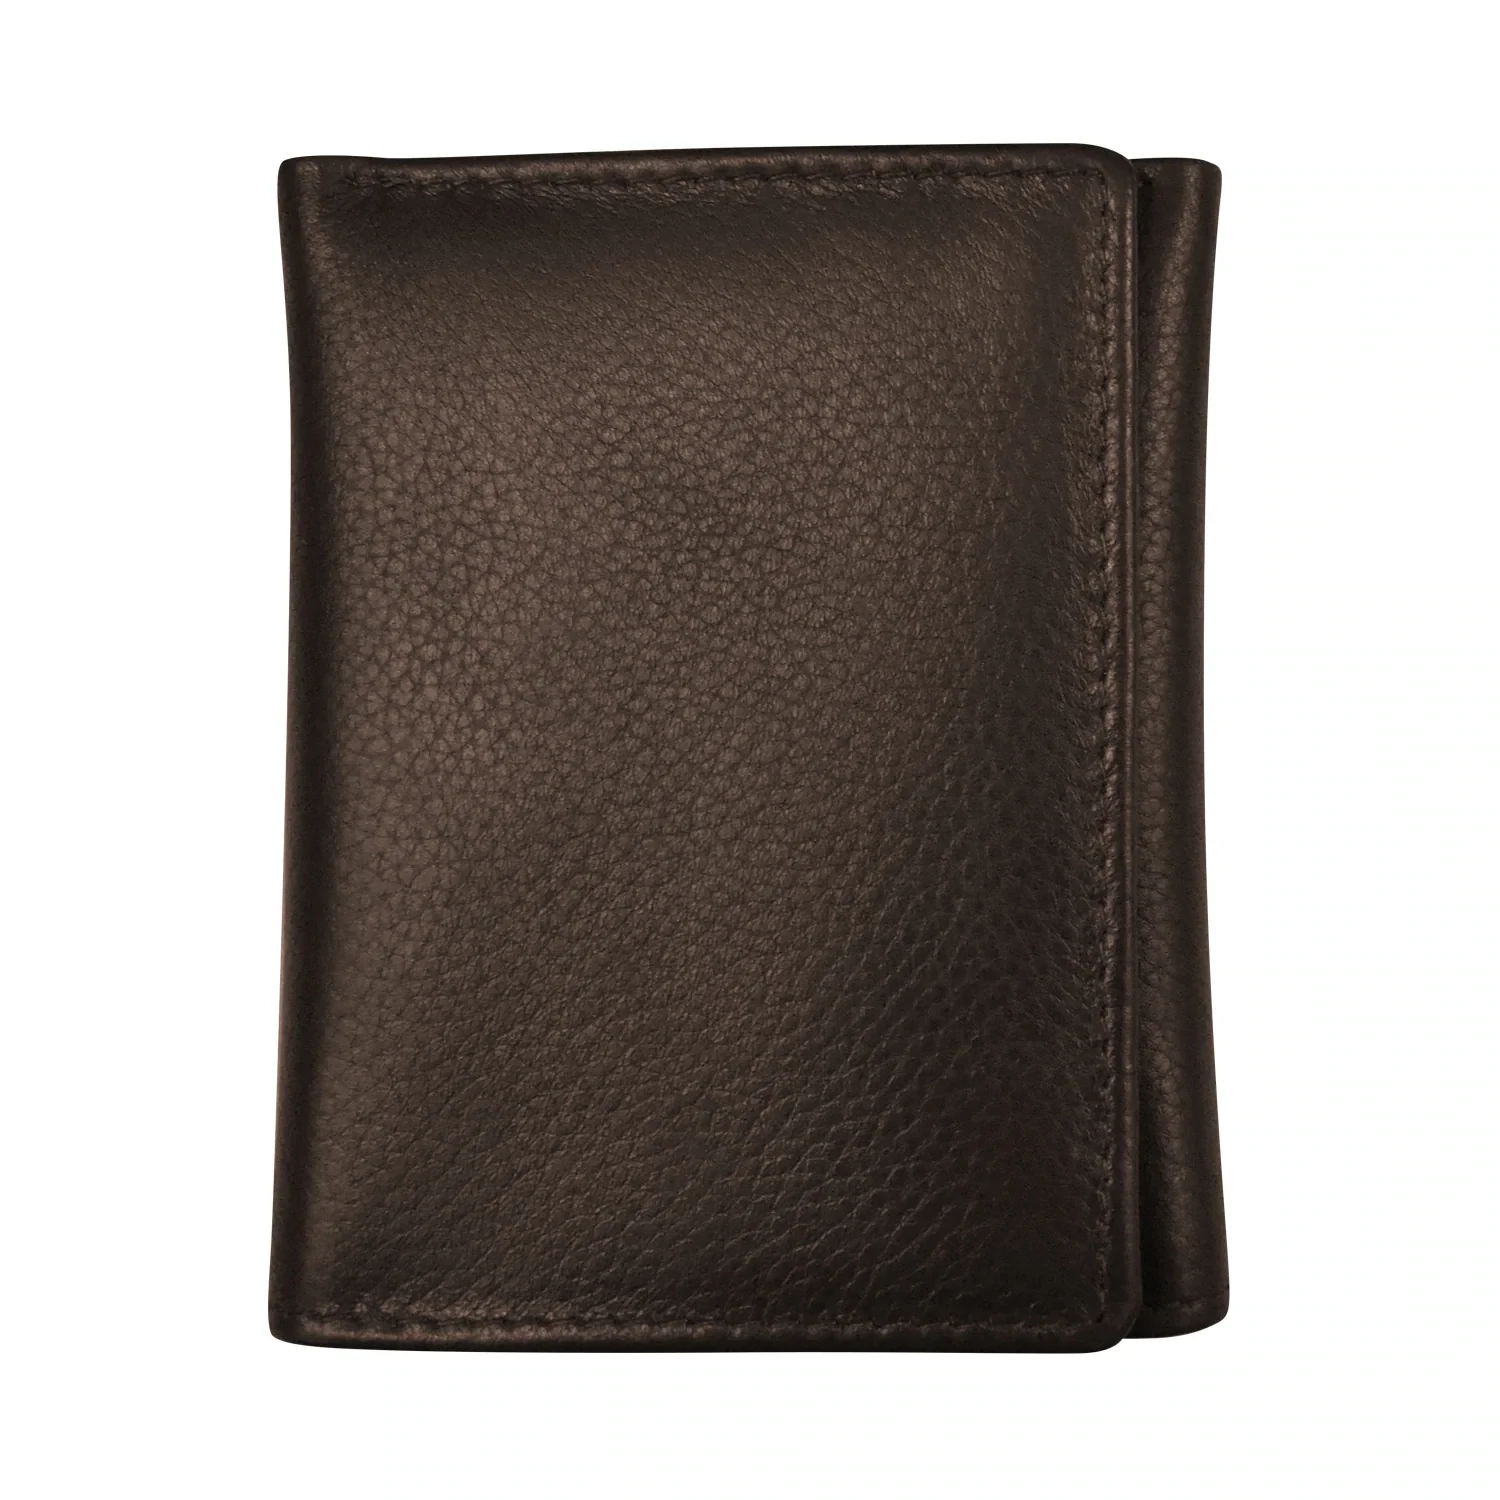 Mocha Pebble Grain Leather Trifold Wallet